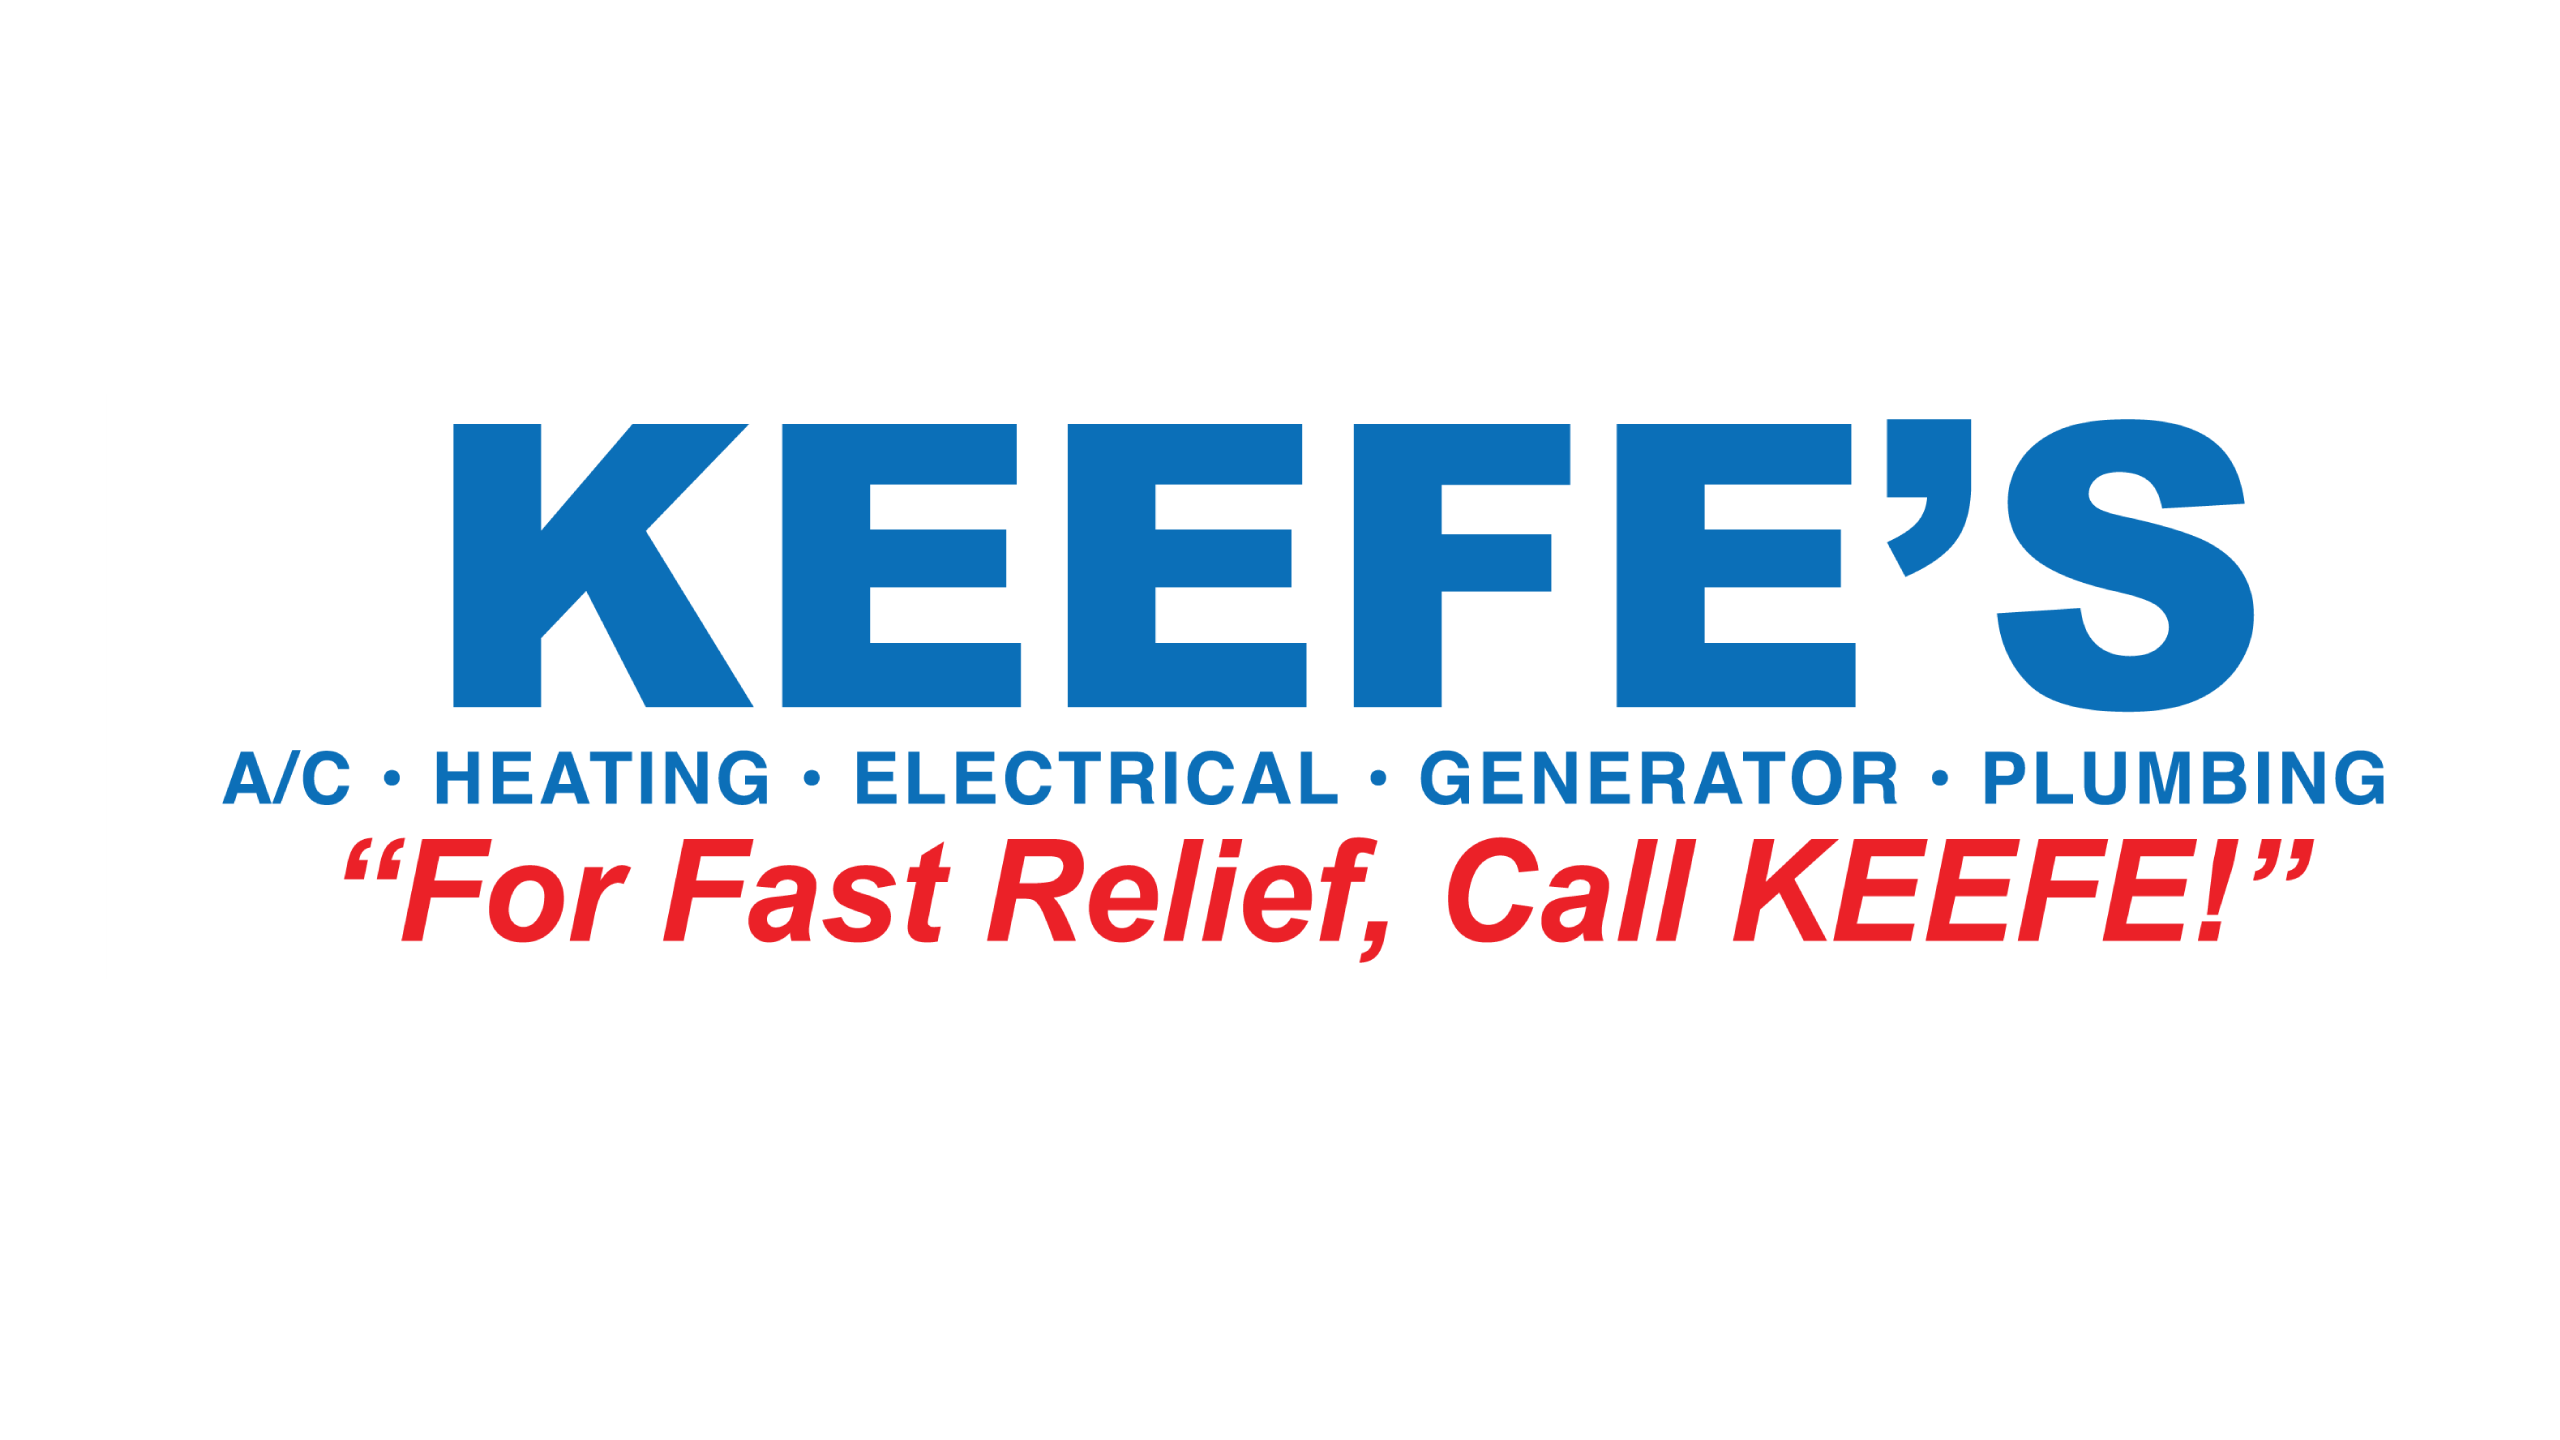 Keefe's A/C - Heating - Electrical - Generator - Plumbing Logo